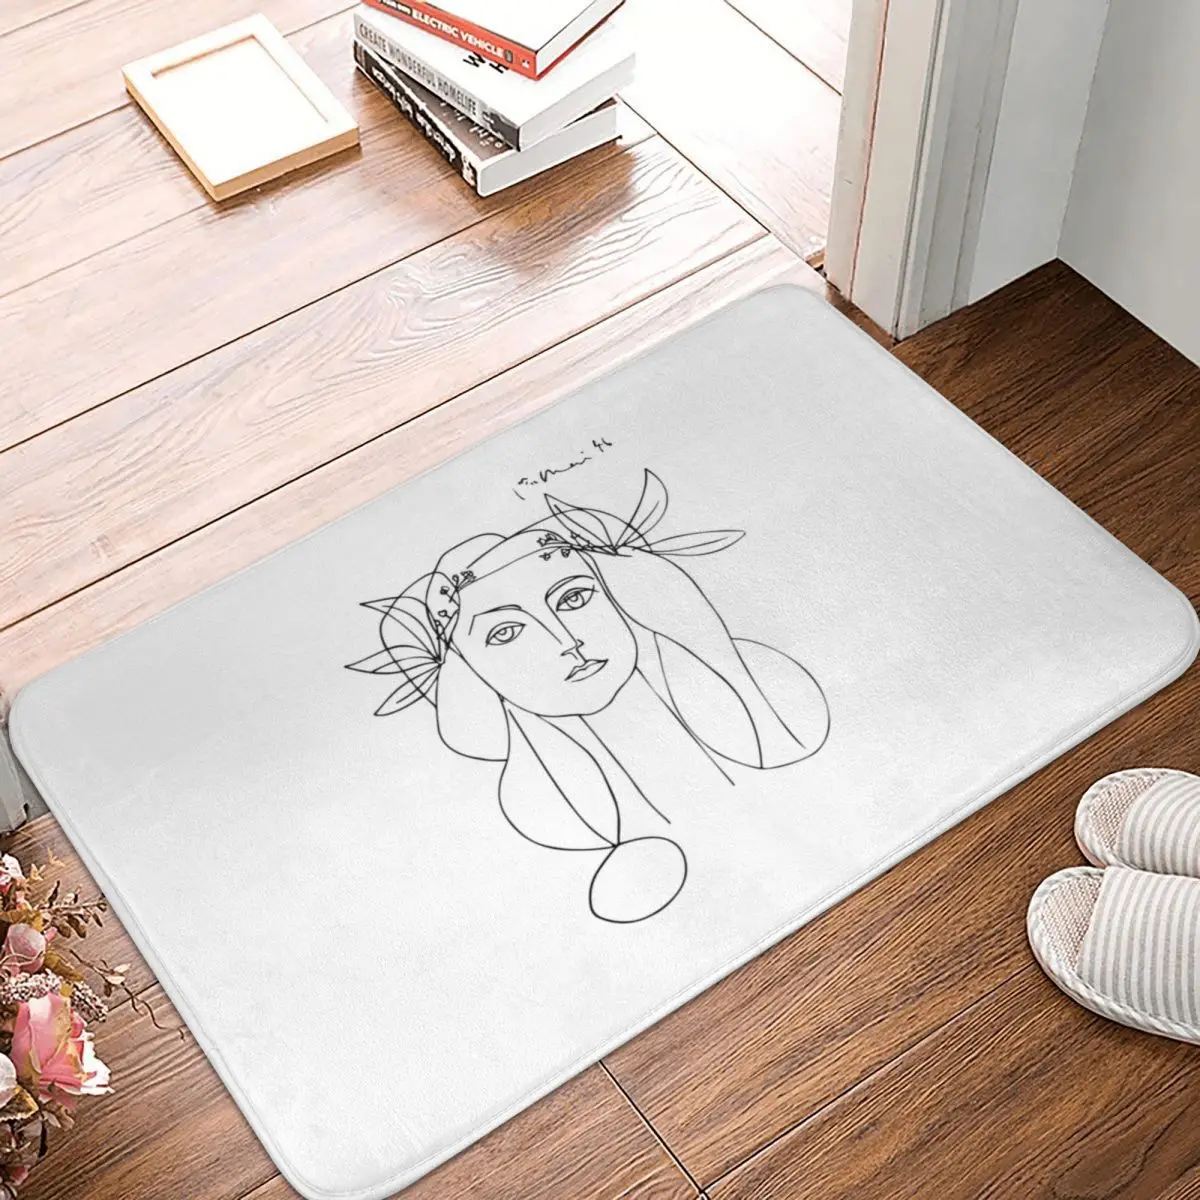 

Picasso Artwork Sketch Doormat Carpet Mat Rug Polyester PVC Non-Slip Floor Decor Bath Bathroom Kitchen Balcony 40x60